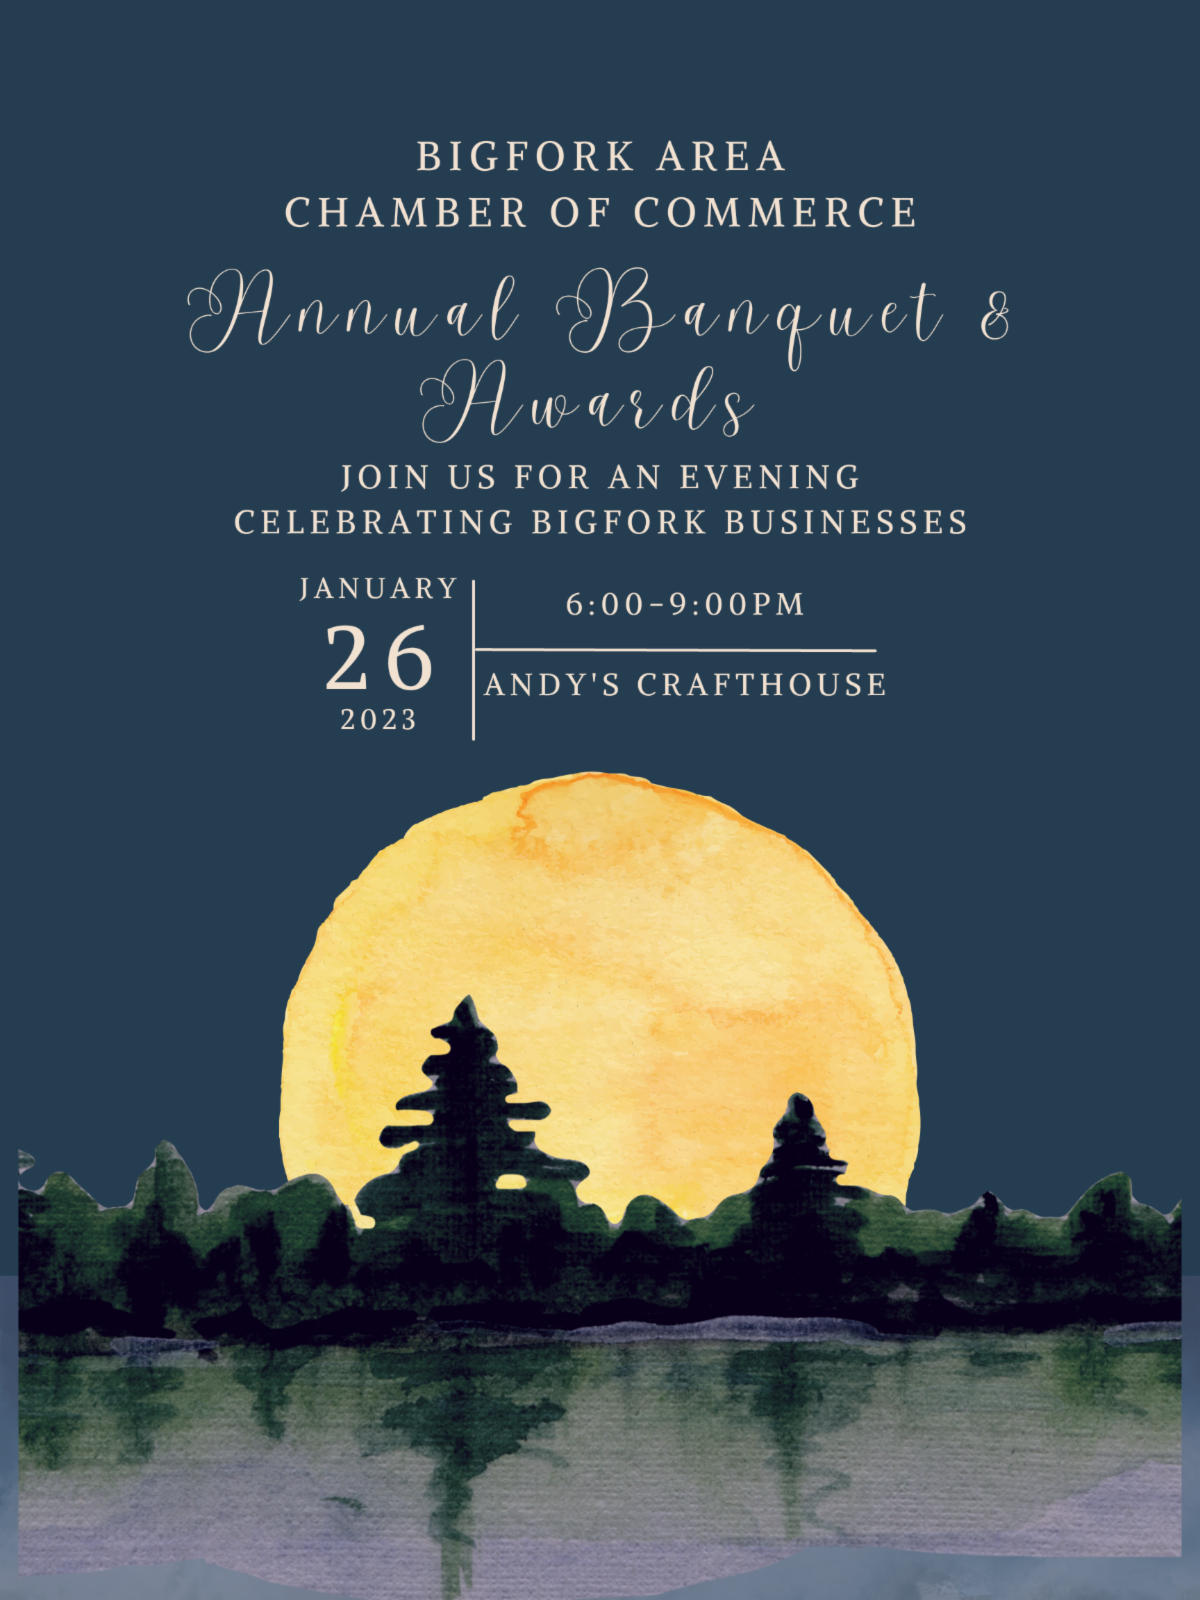 Invitation to Awards Banquet